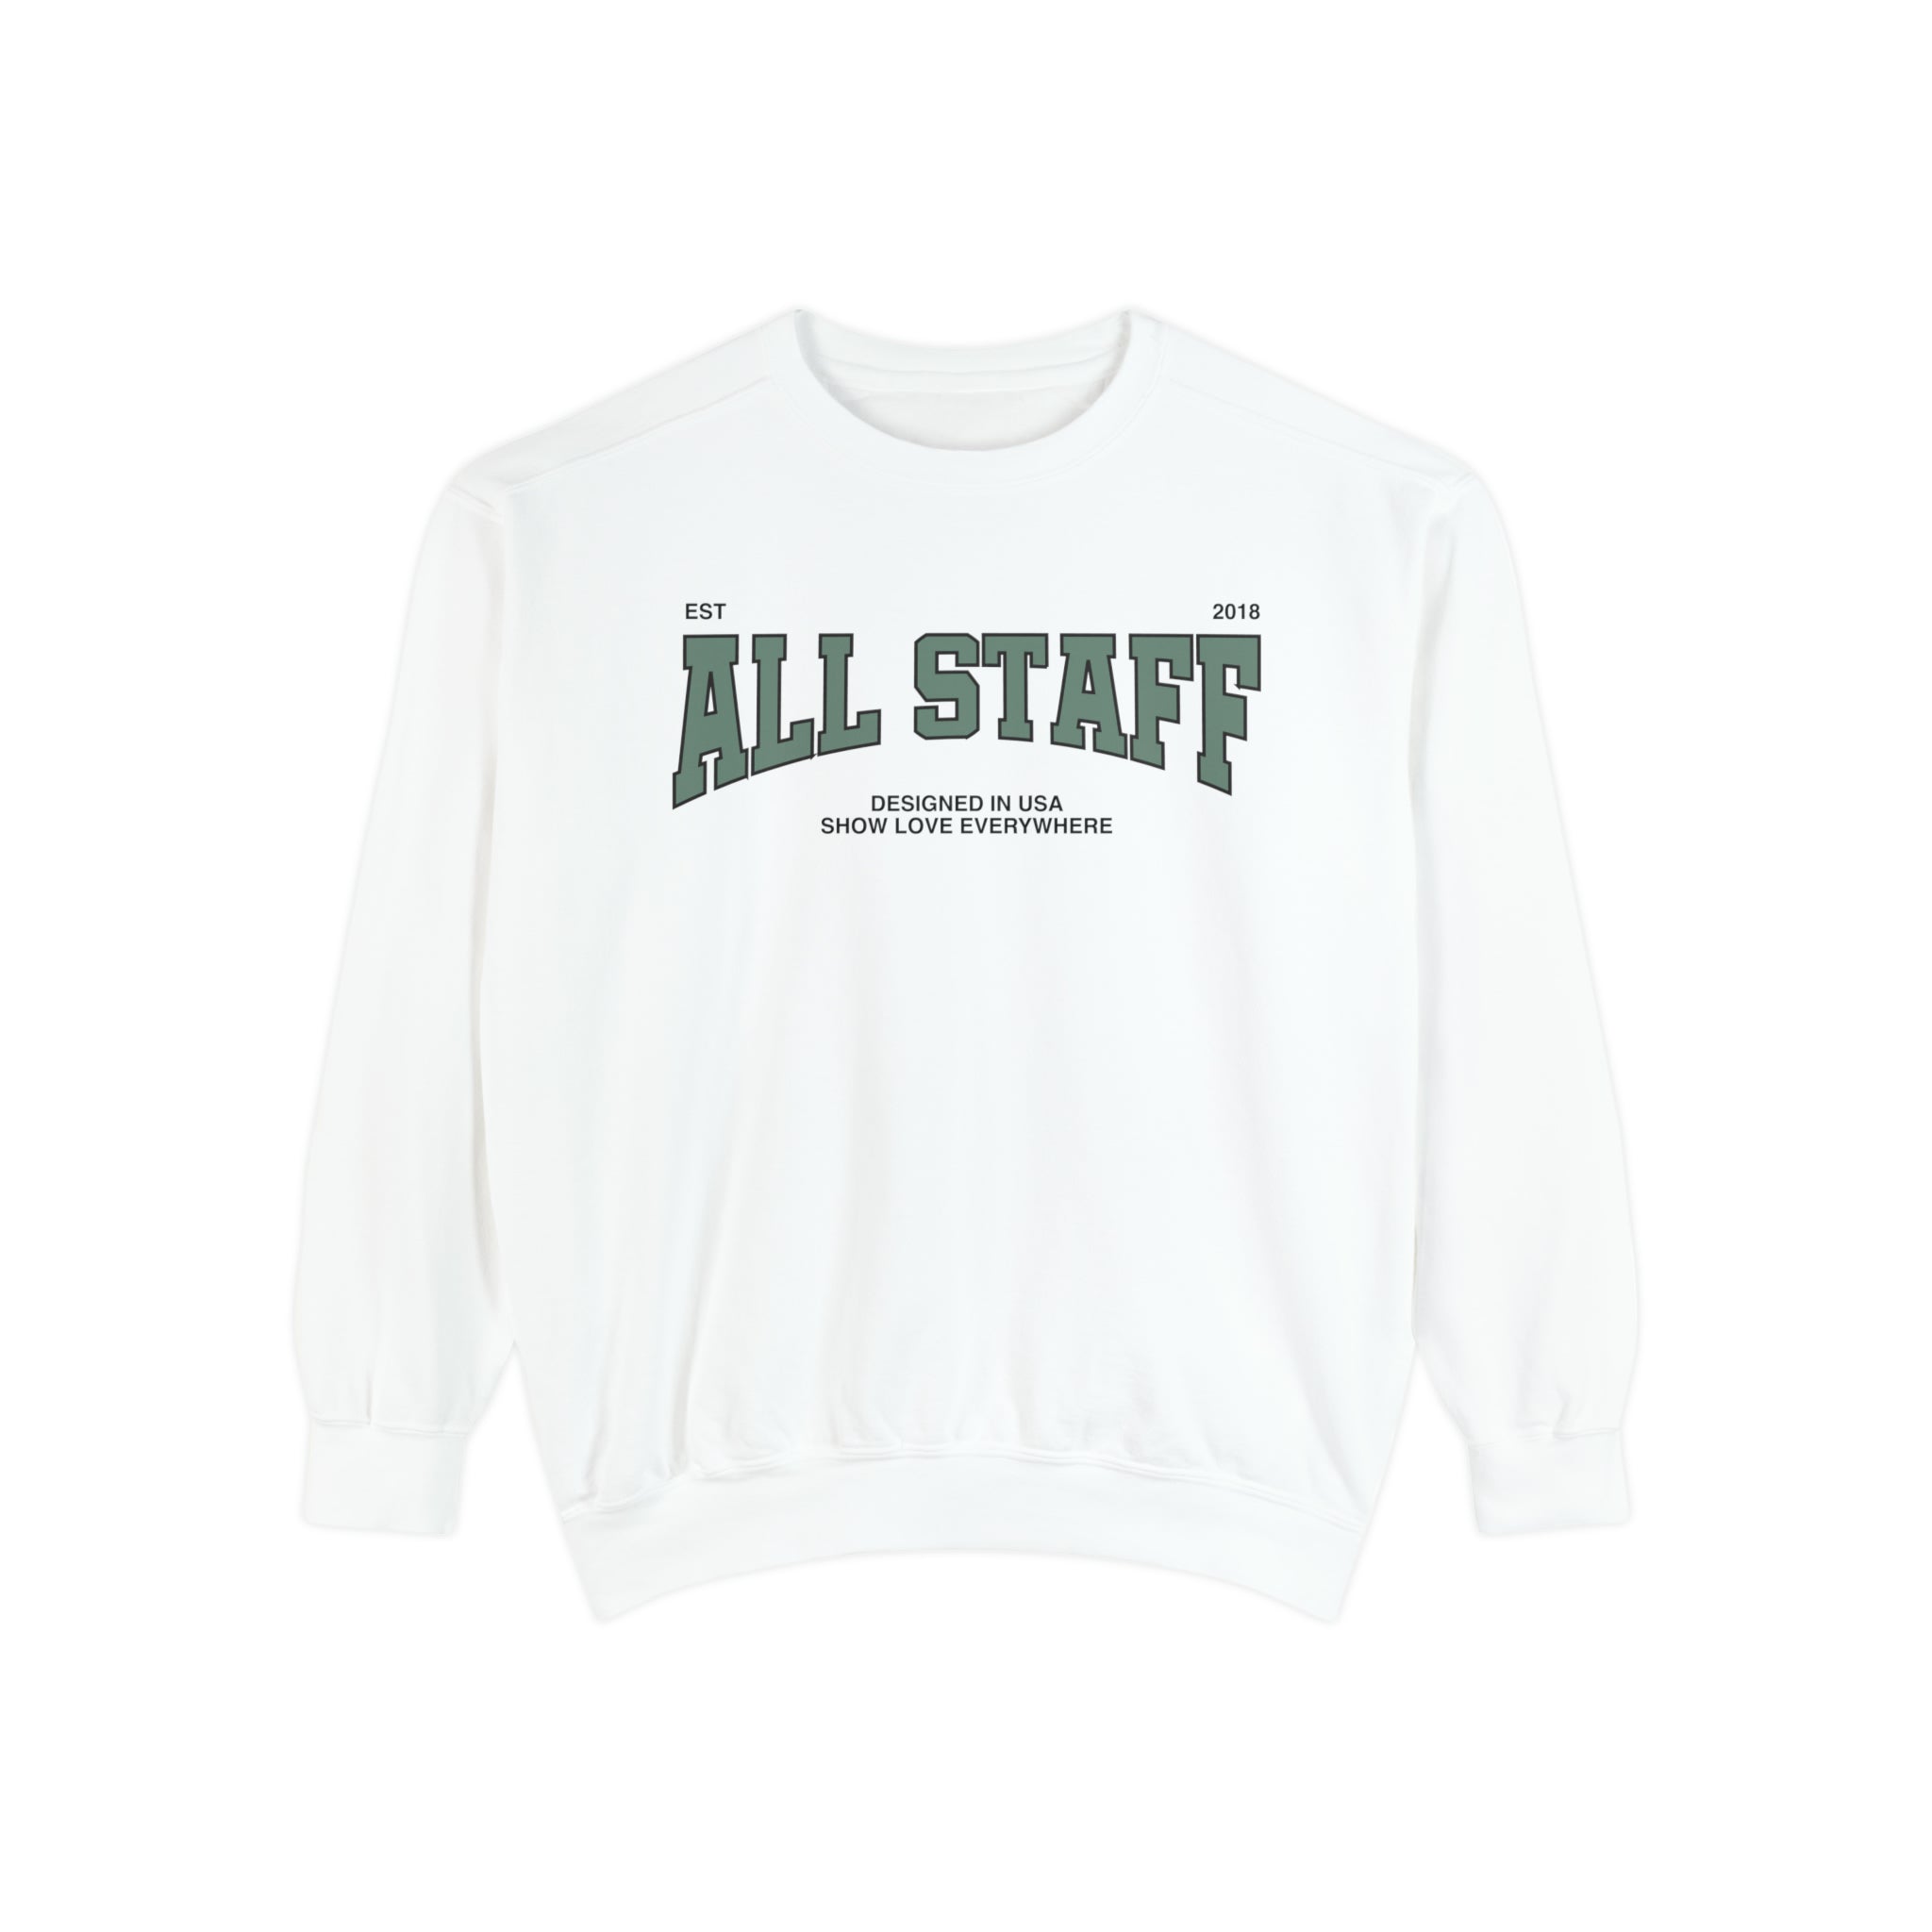 All Staff Collegiate Crew Sweatshirt in White